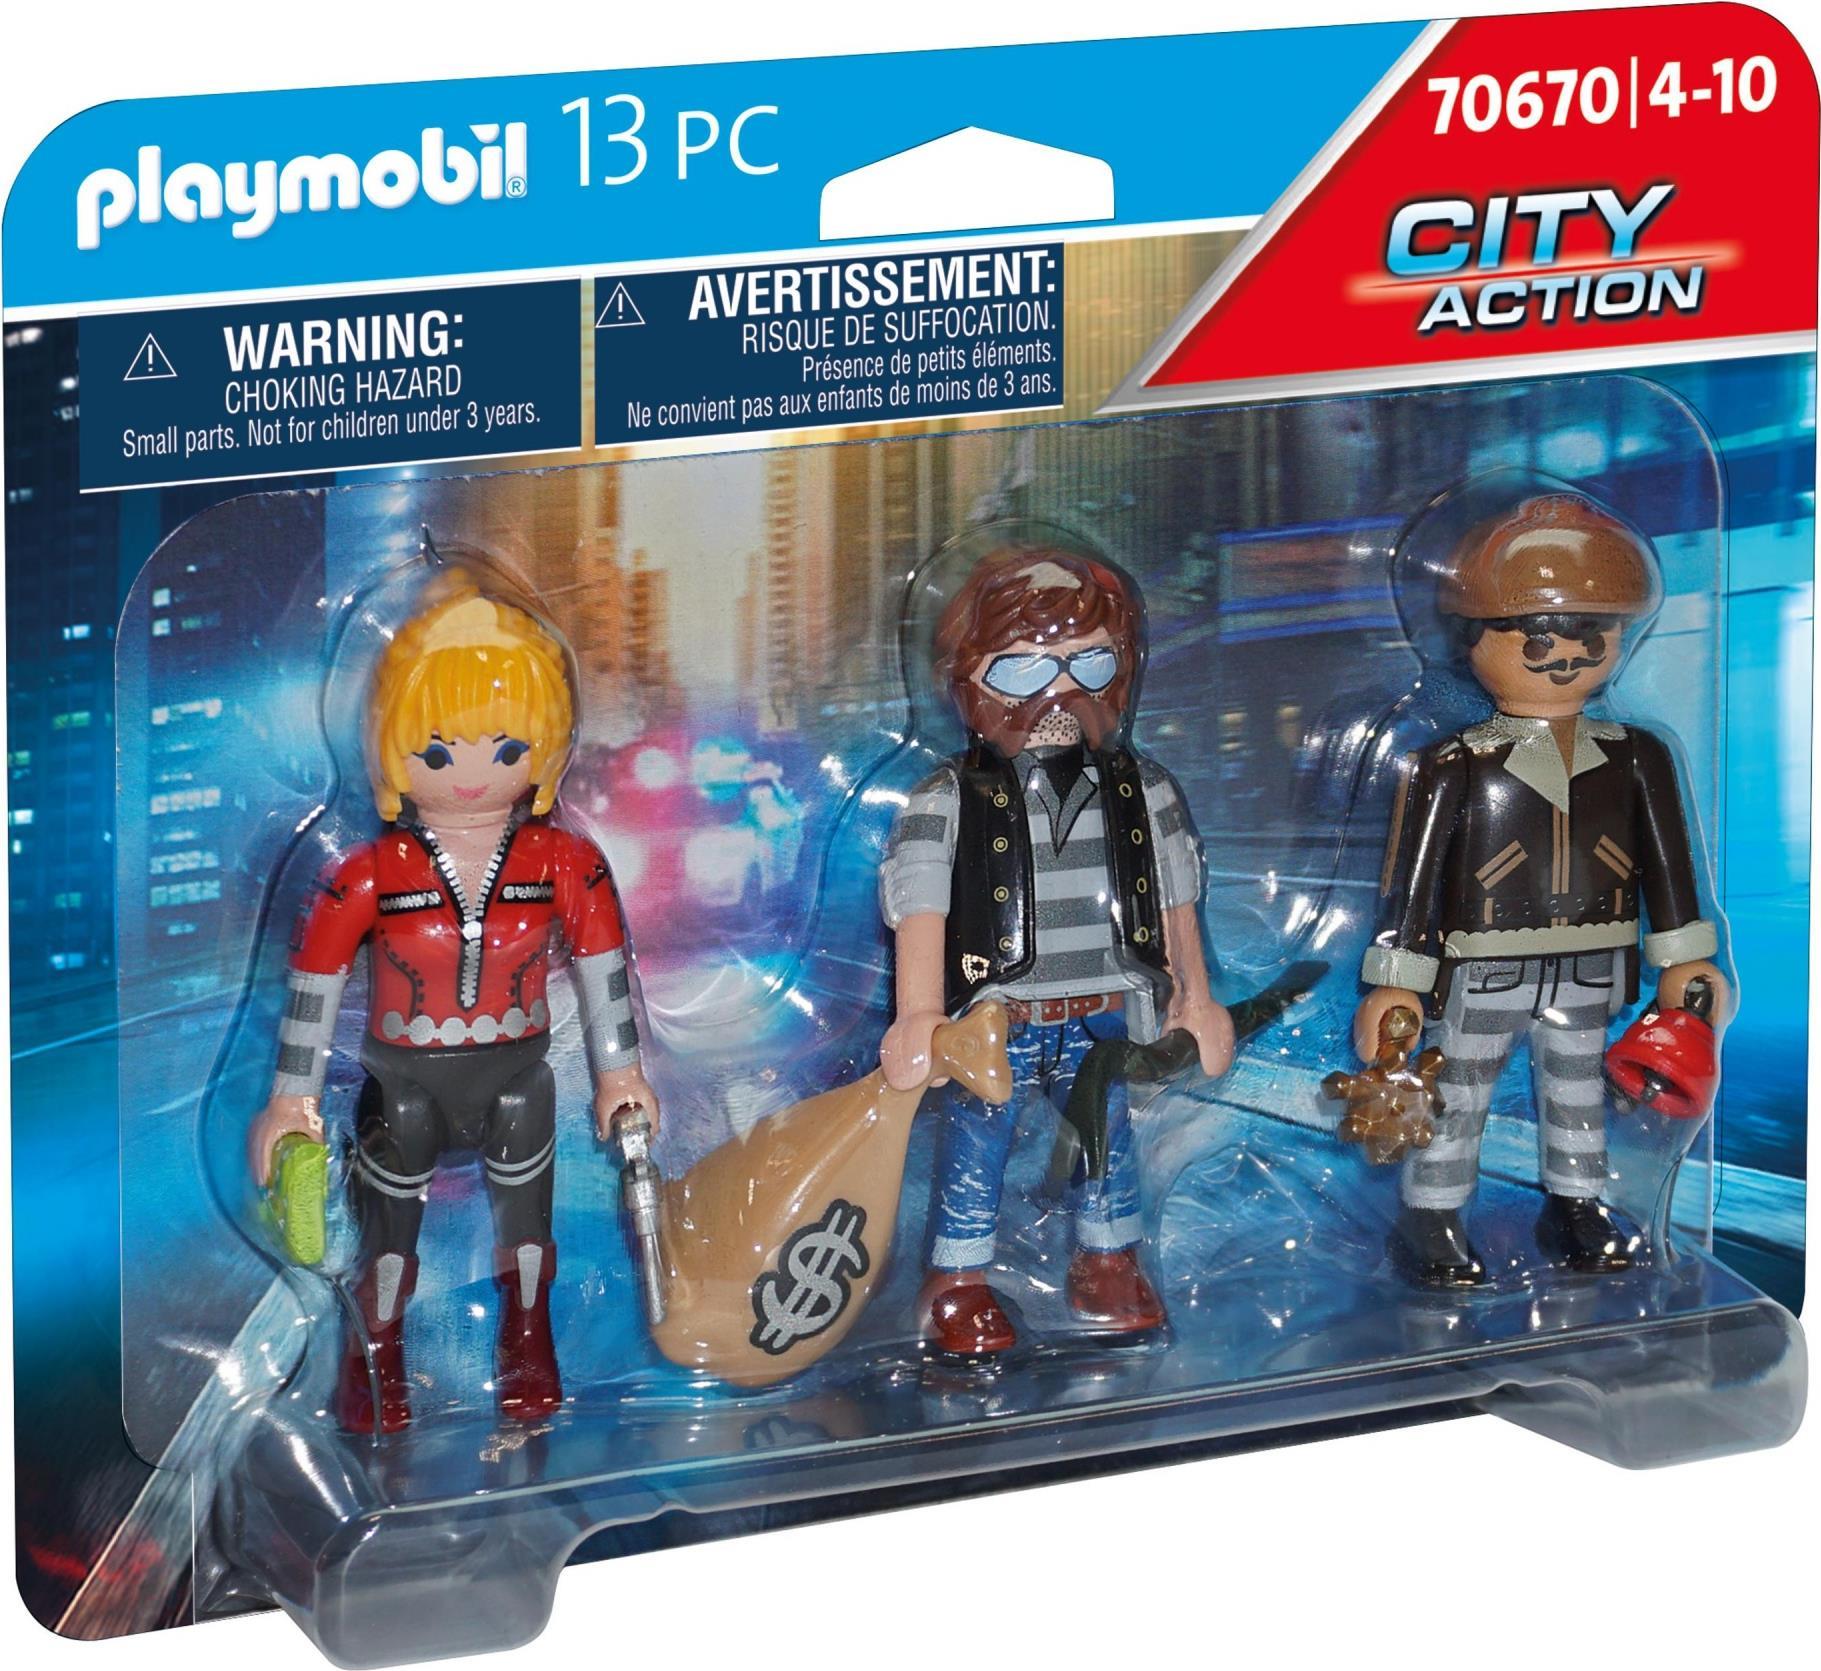 Playmobil City Action Figurenset Ganoven - Junge/Mädchen - 4 Jahr(e) - Kunststoff - Mehrfarben (70670)